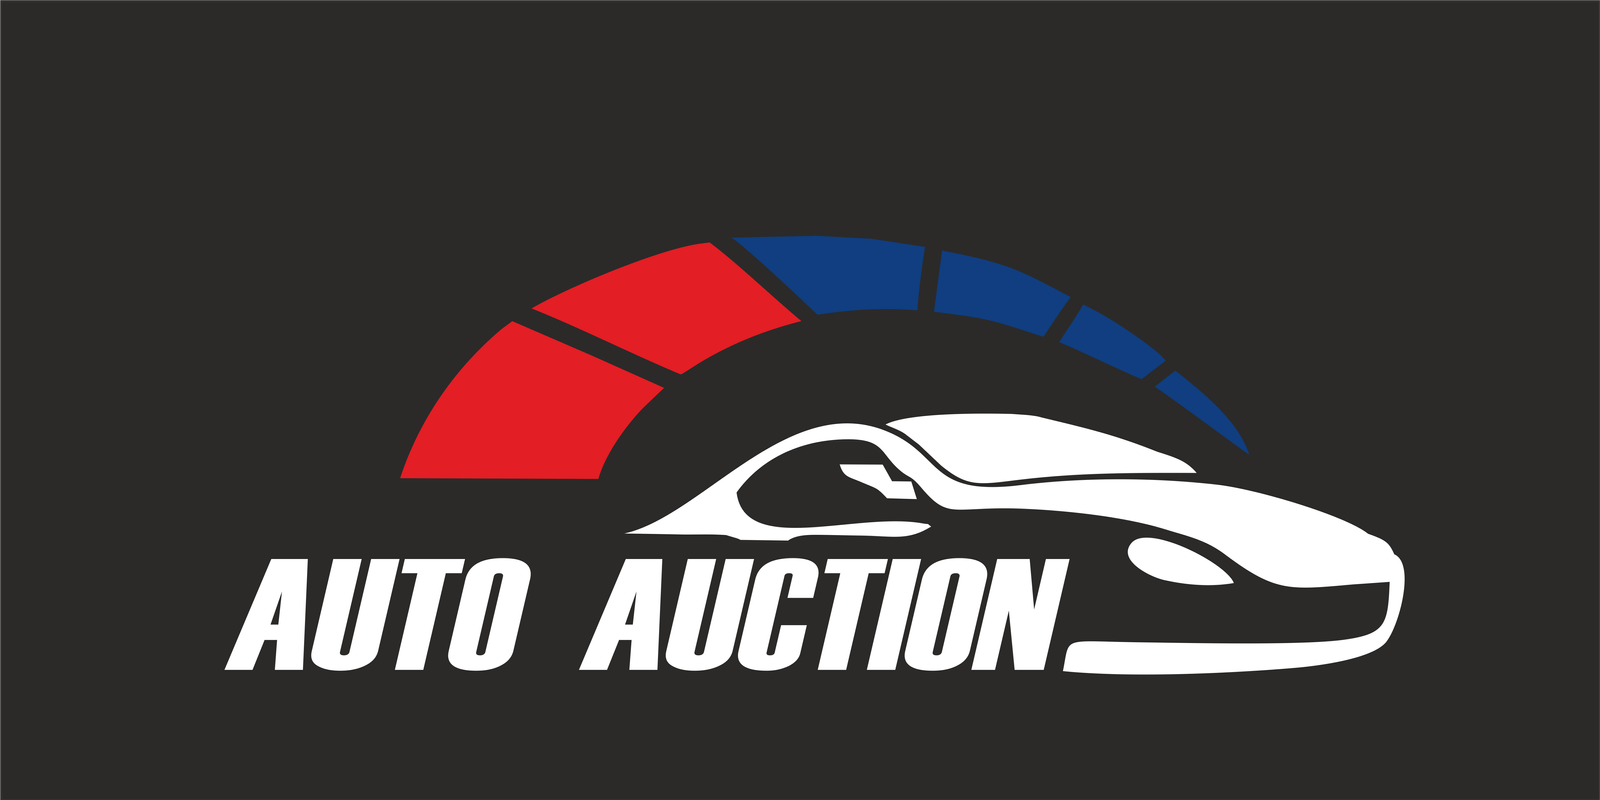 Avto auksion. Auto Auction. Auto Auction logo.